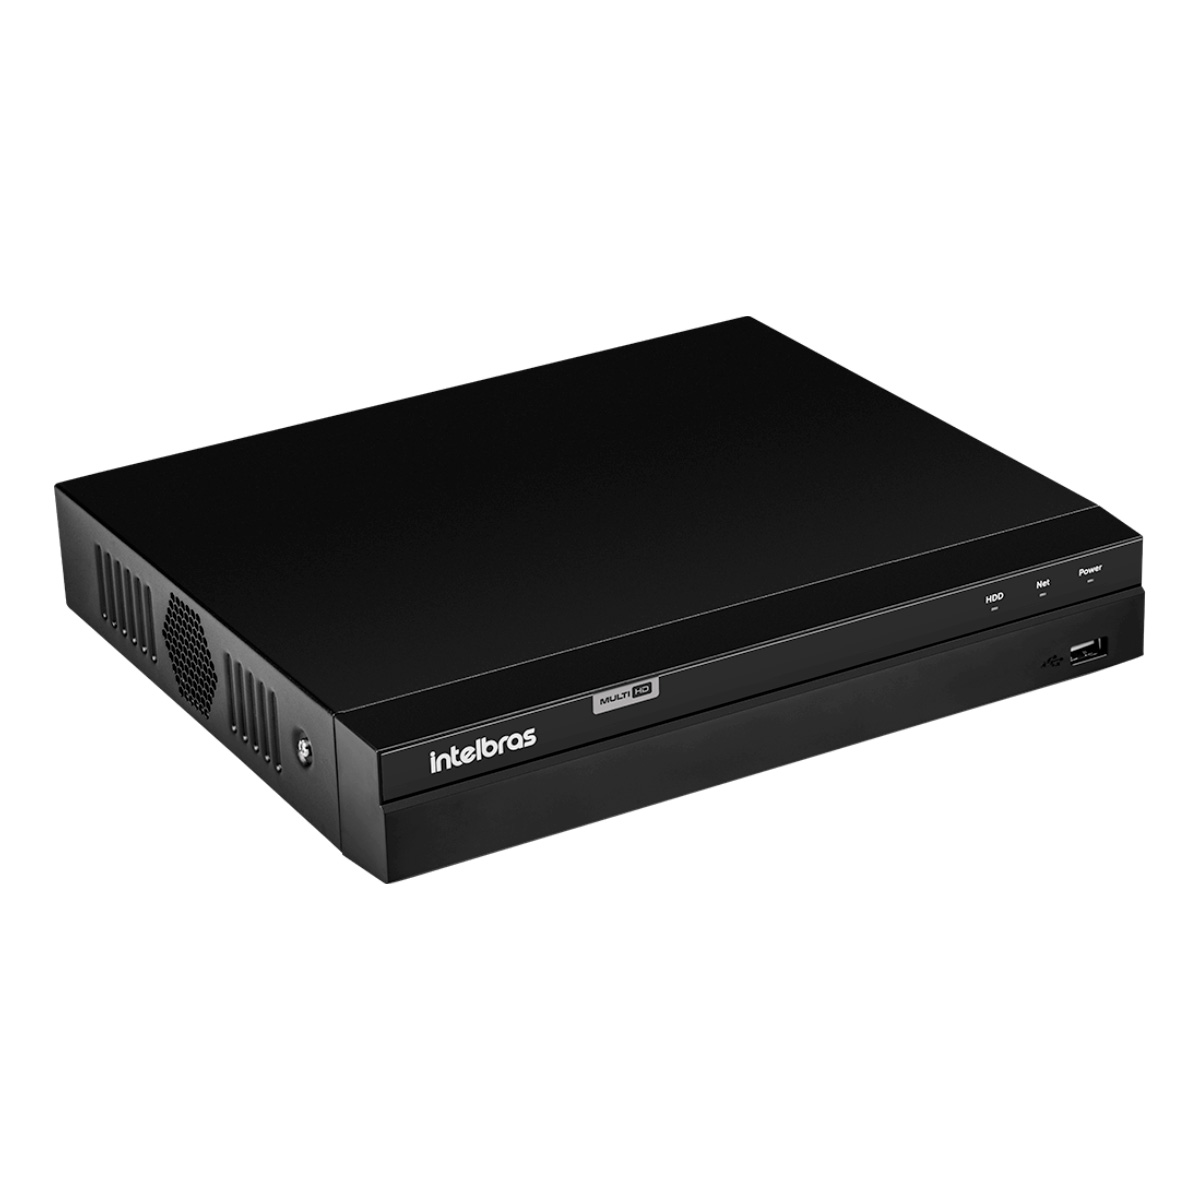 DVR 4 Canais Intelbras MHDX 1204 AM - Gravador Digital - Multi HD - IP, HDCVI, HDTVI, AHD e Analógica - Compatibilidade ONVIF